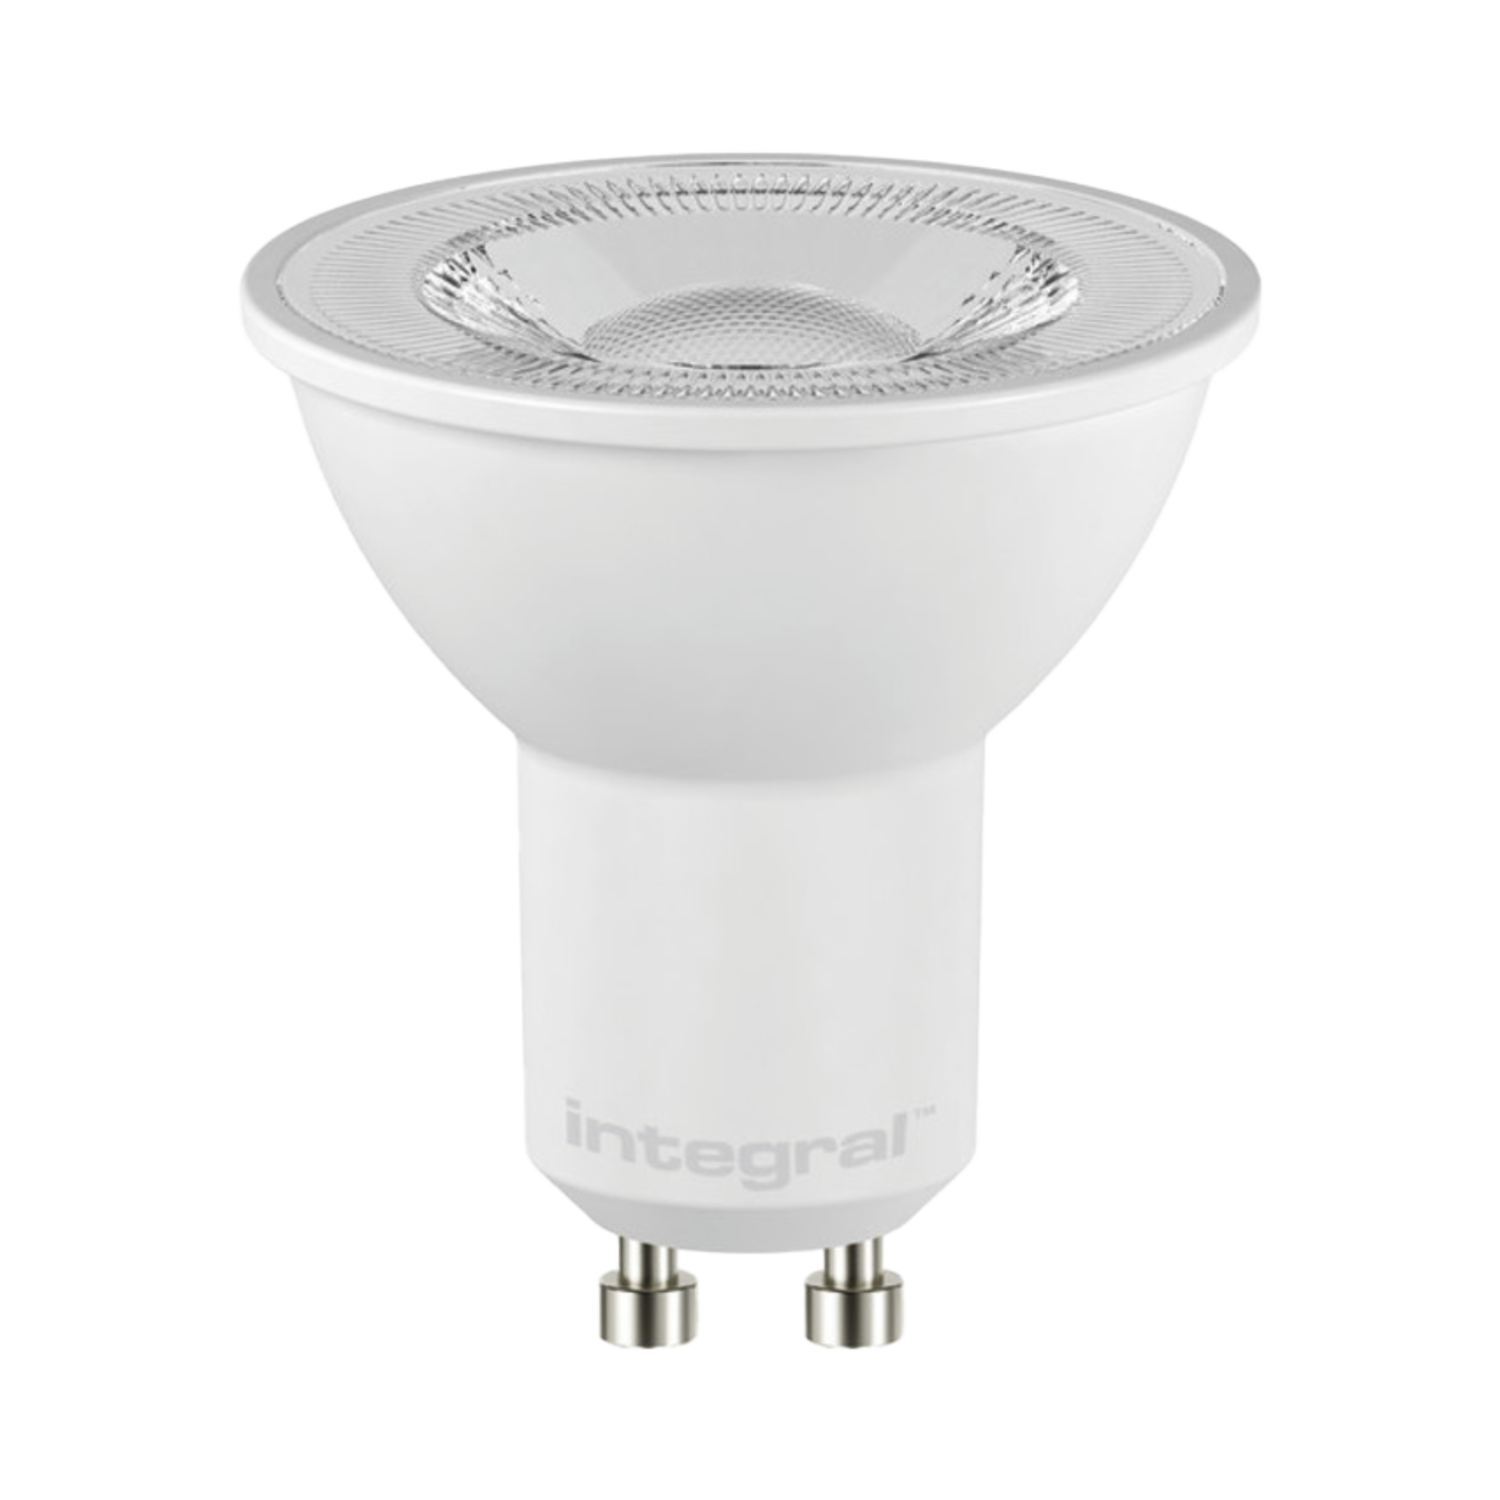 Klein Verwaand Verraad GU10 LED lamp 5.7 watt Warm Wit 3000K Dimbaar | Qub LED Railverlichting